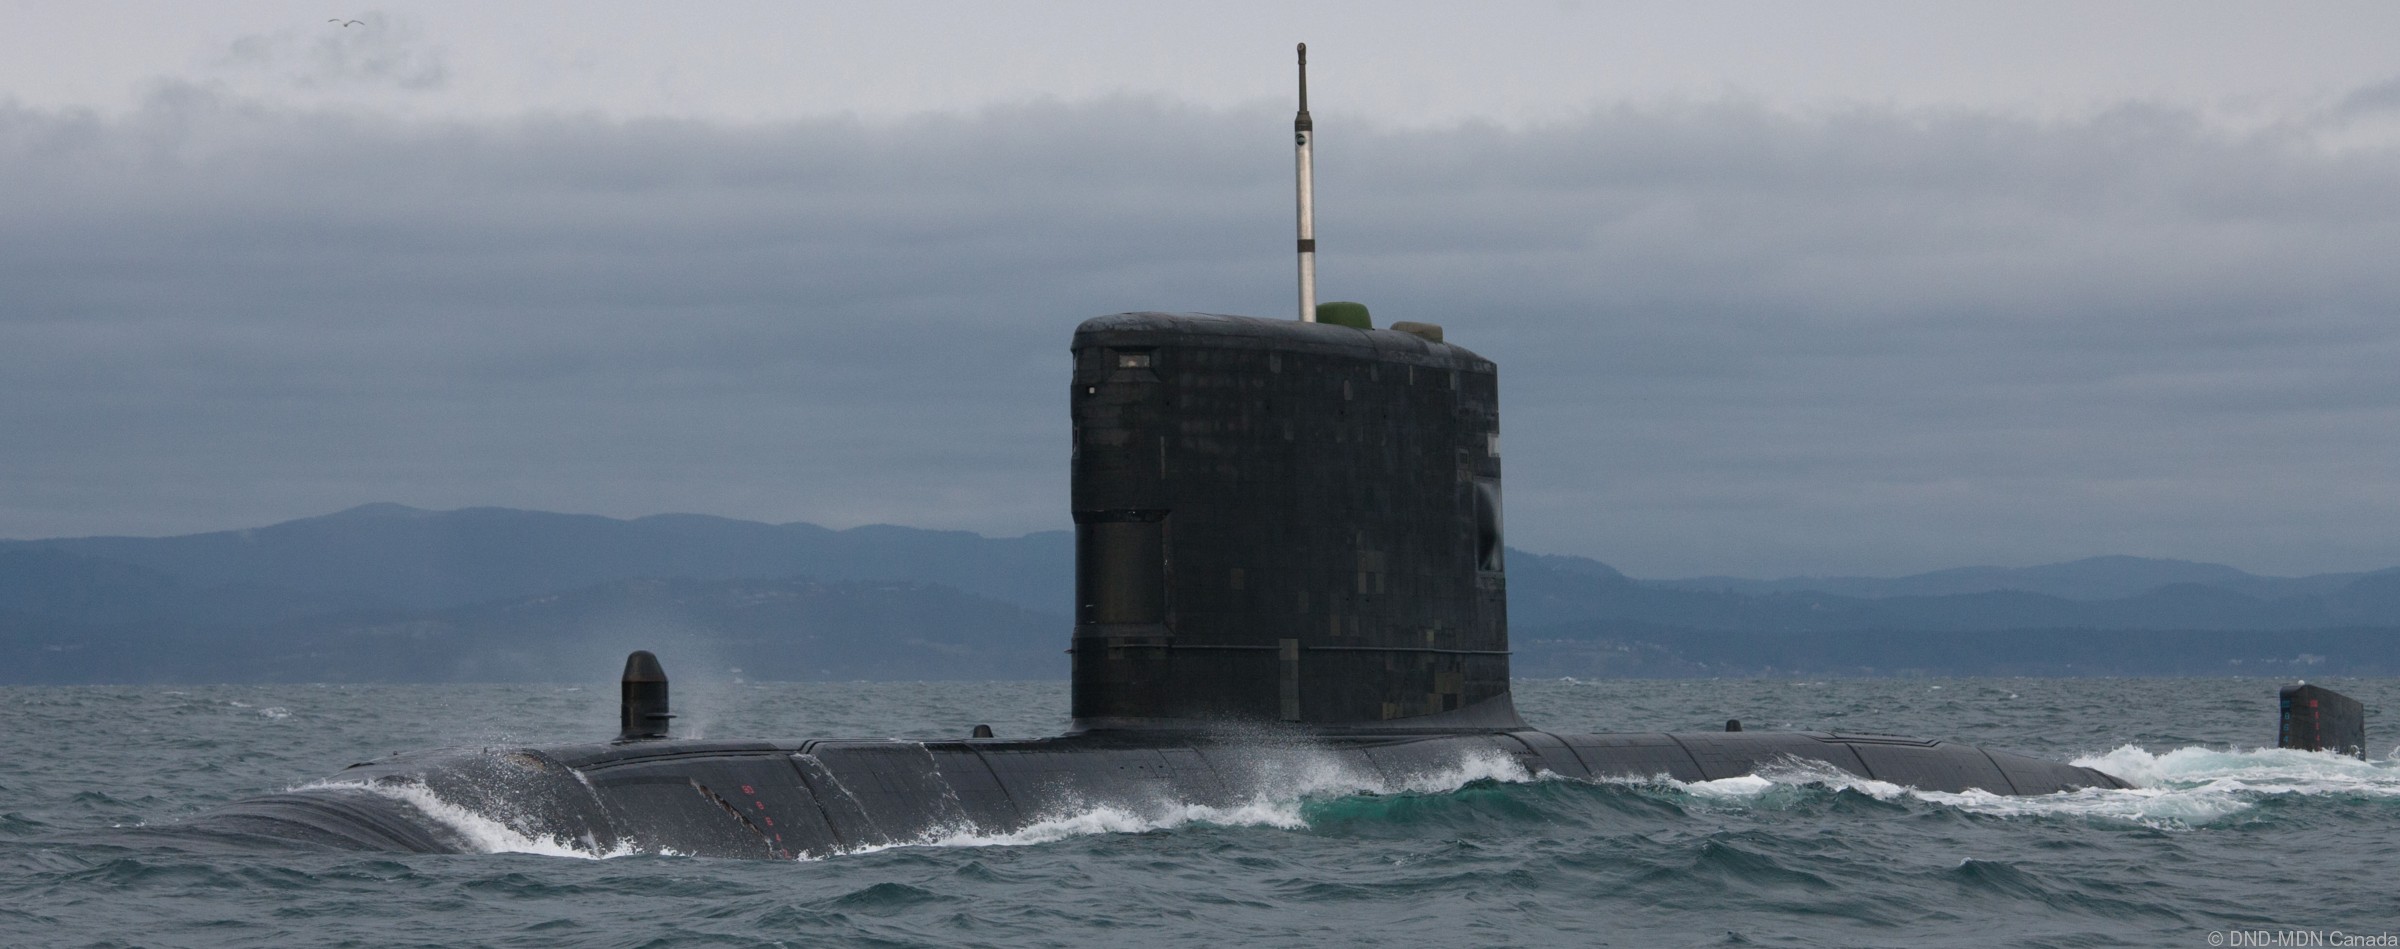 ssk-876 hmcs victoria upholder class attack submarine hunter killer ncsm royal canadian navy 25